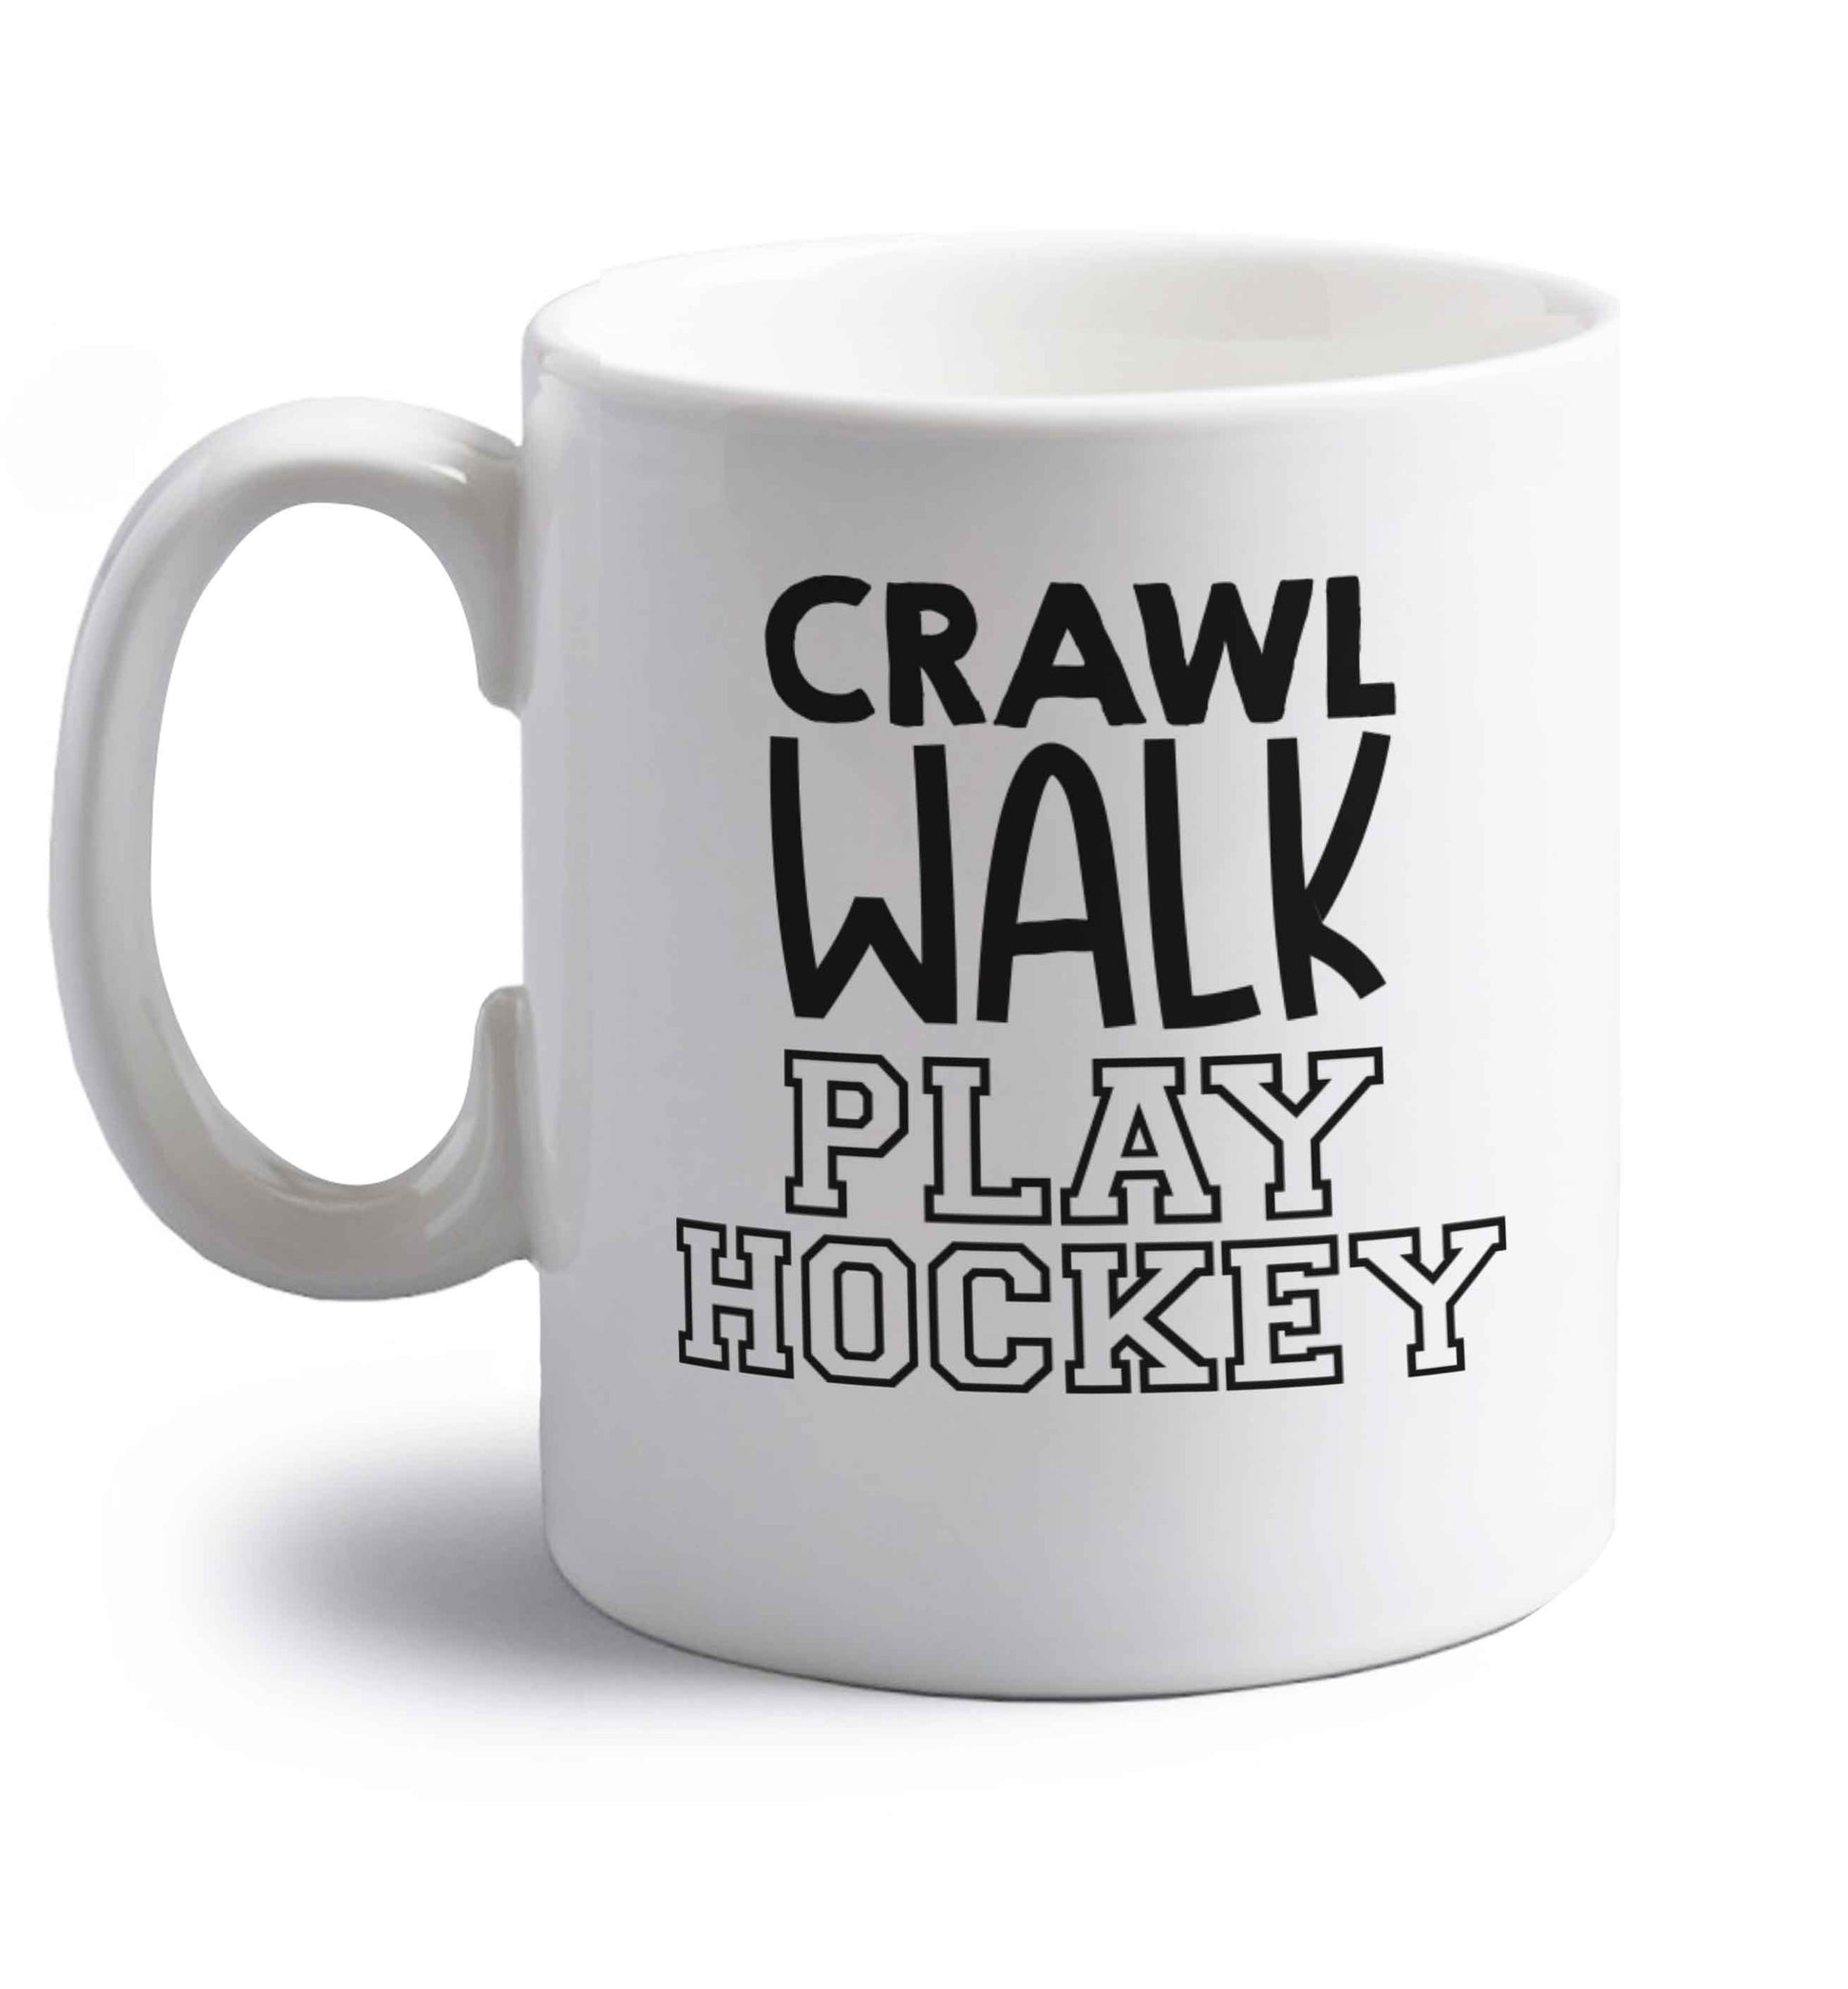 Crawl walk play hockey right handed white ceramic mug 